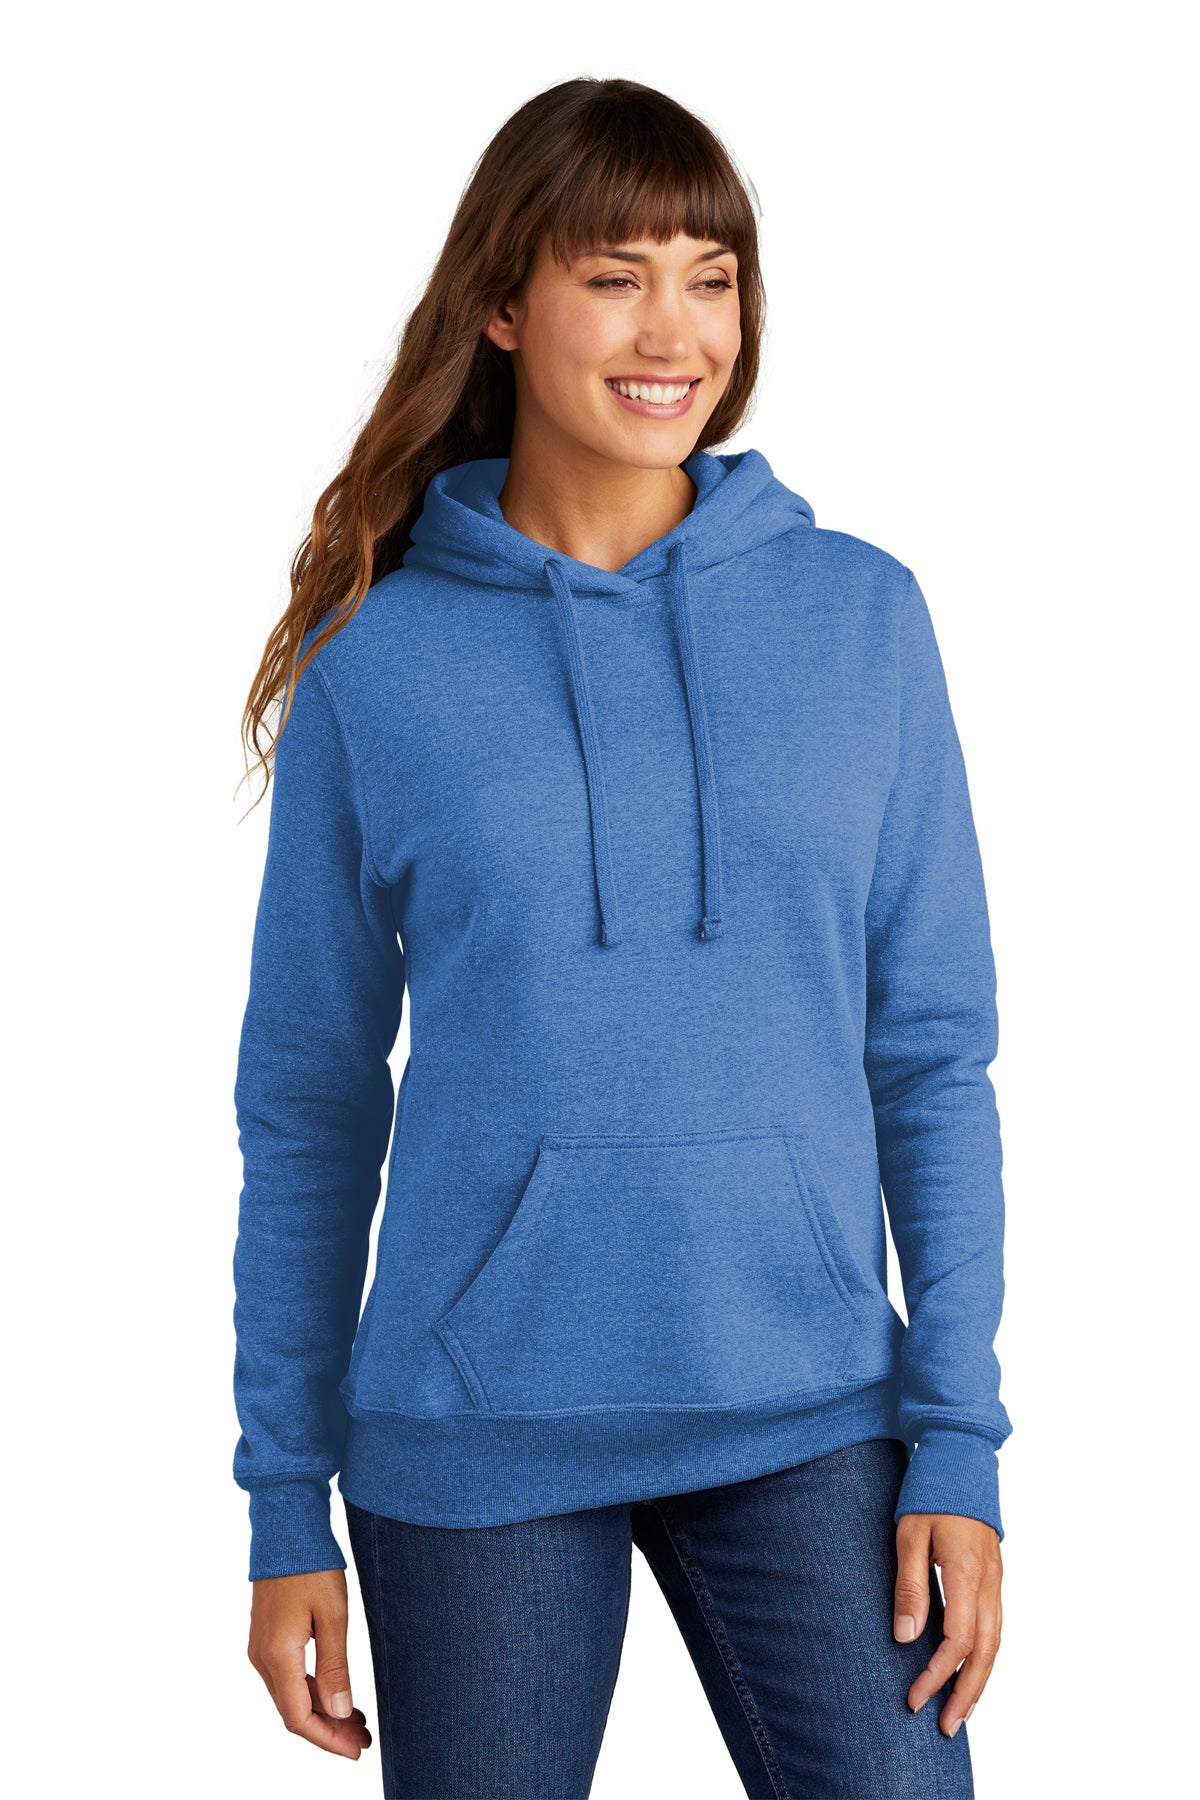 Port & Company ® Ladies Core Fleece Pullover Hooded Sweatshirt lpc78h